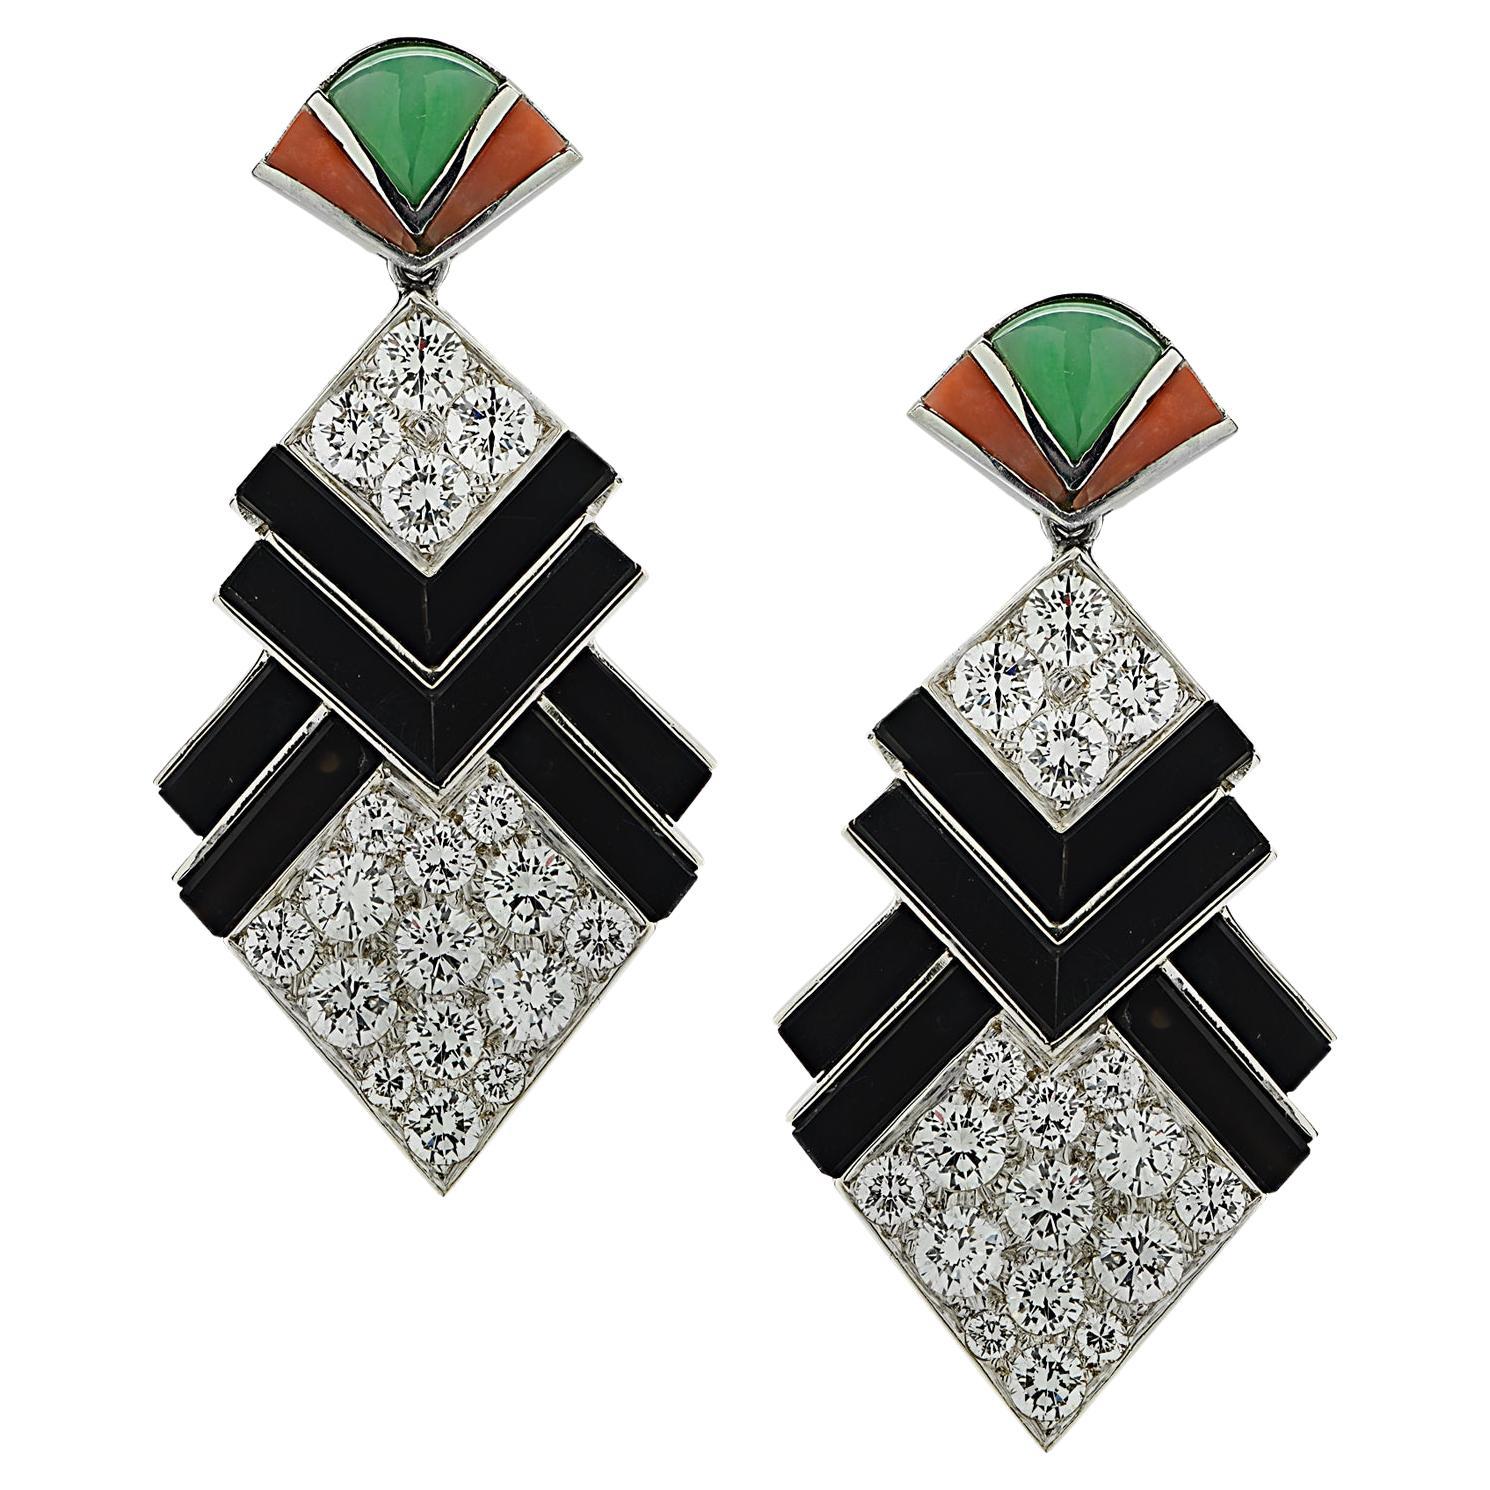 Circa 1960s 6.50 Carat Diamond, Onyx Coral and Jade Earrings